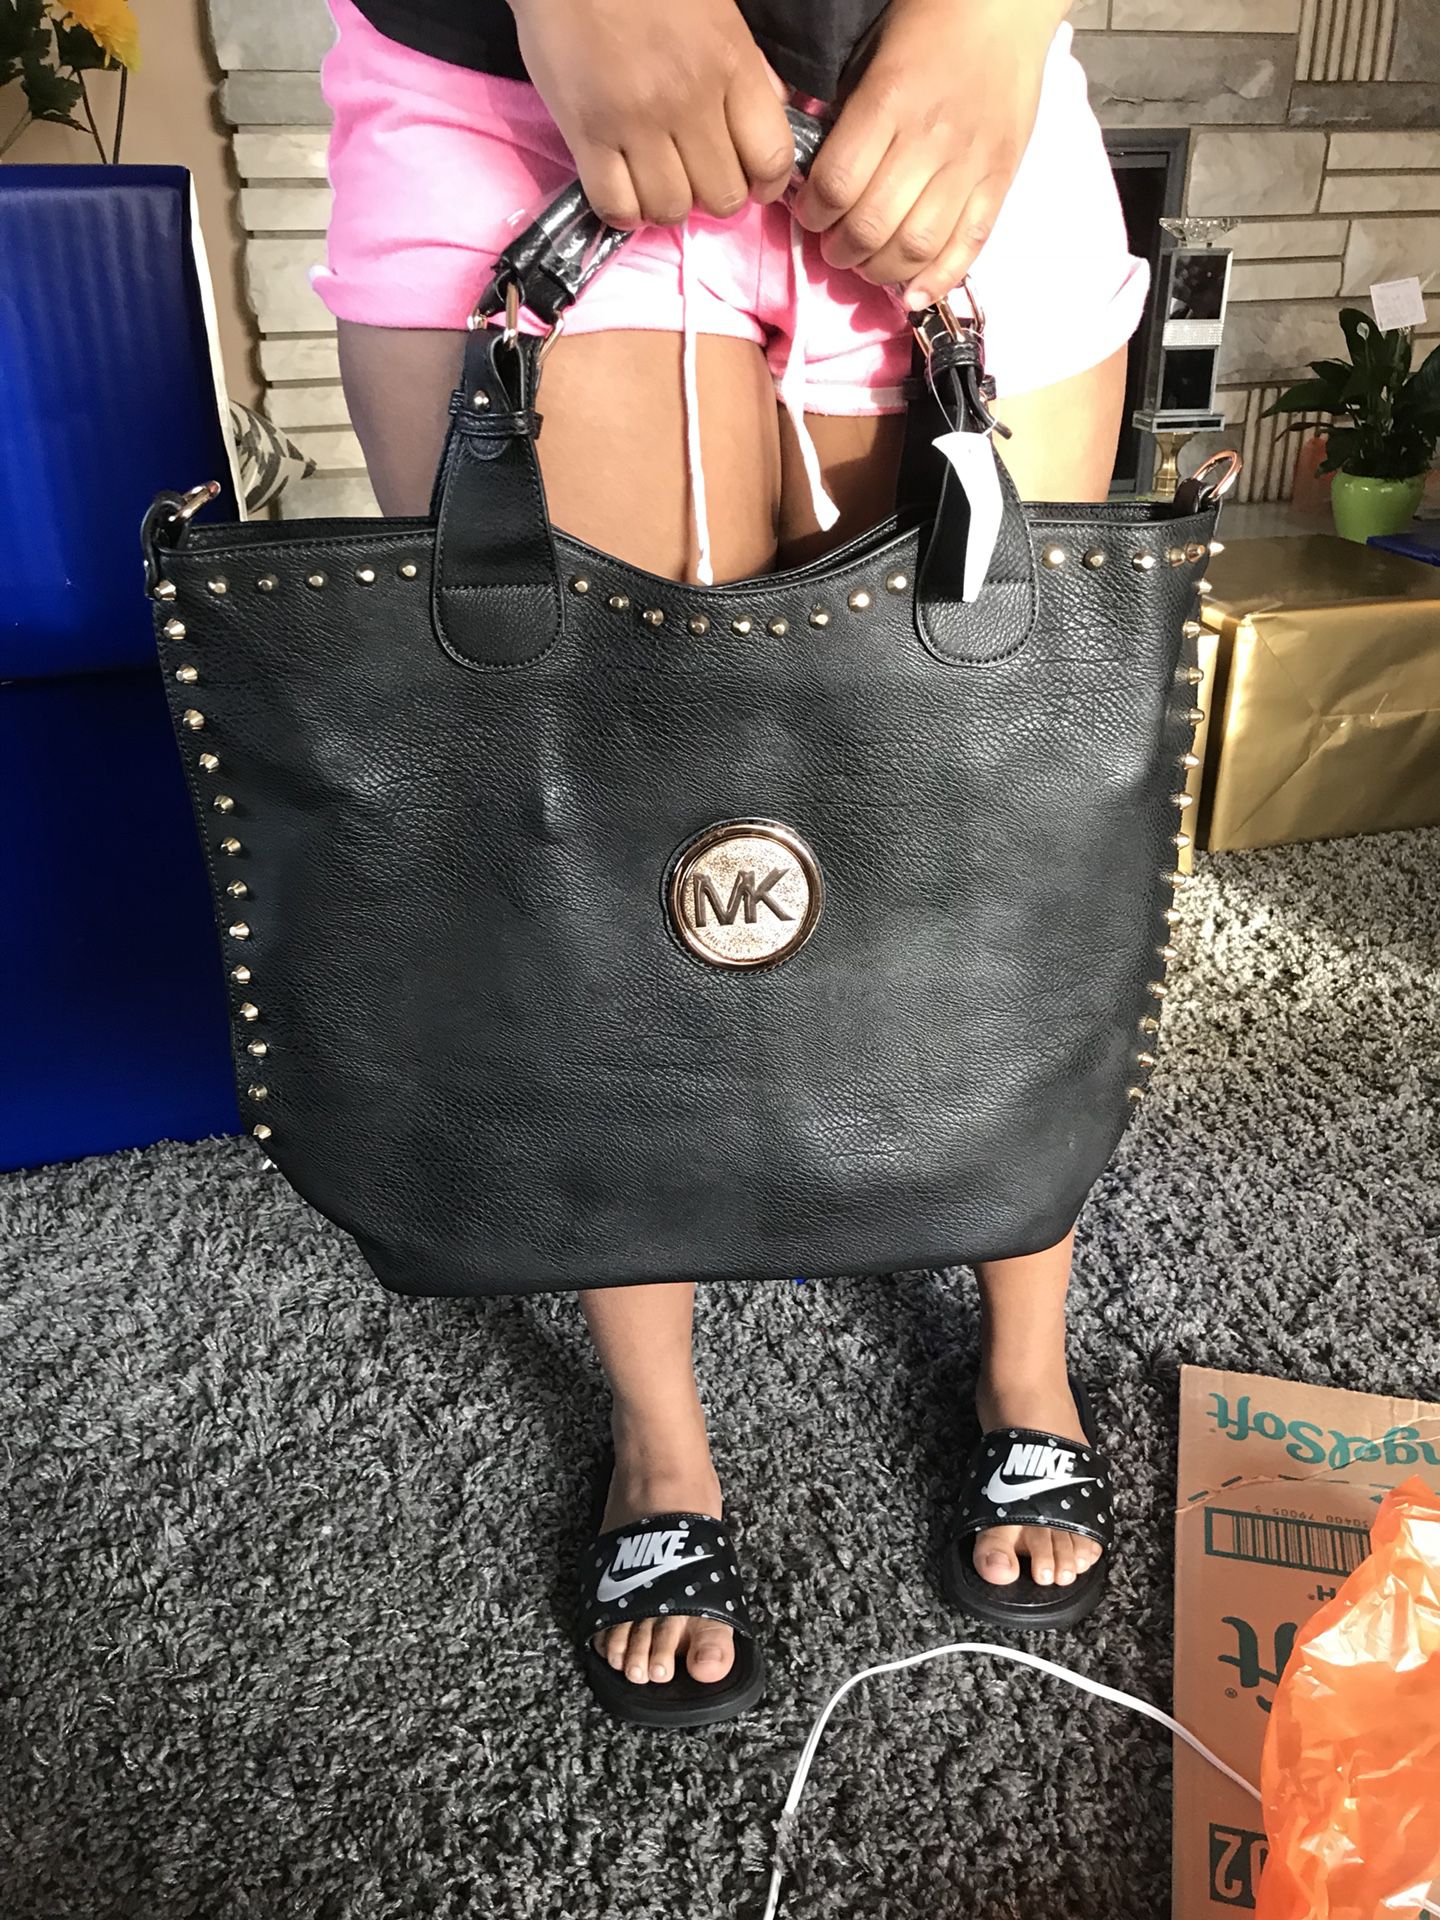 New MK purse